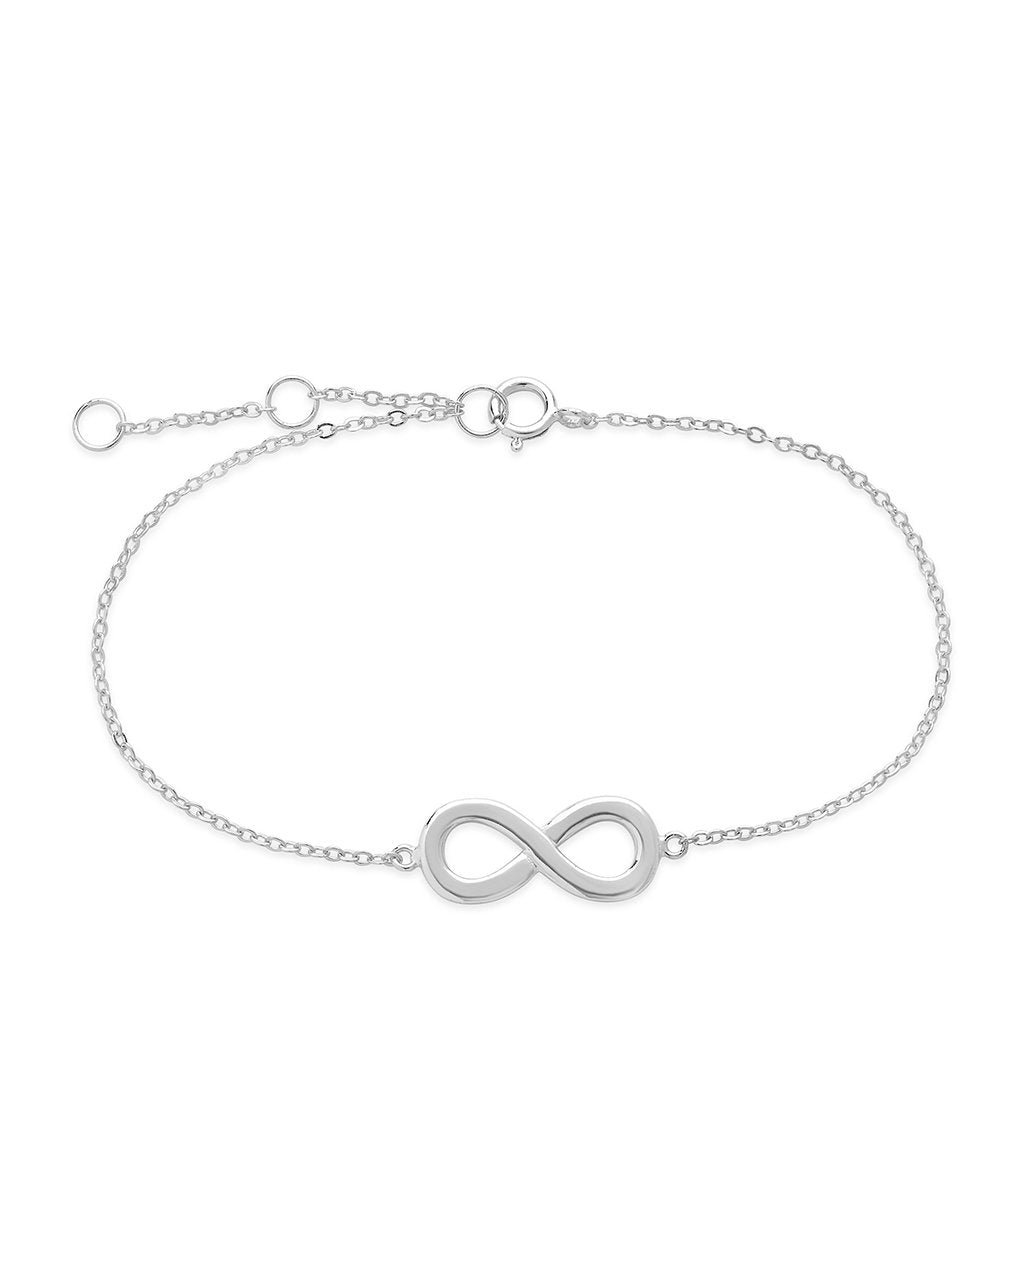 Sterling Silver Delicate Infinity Bracelet - Sterling Forever